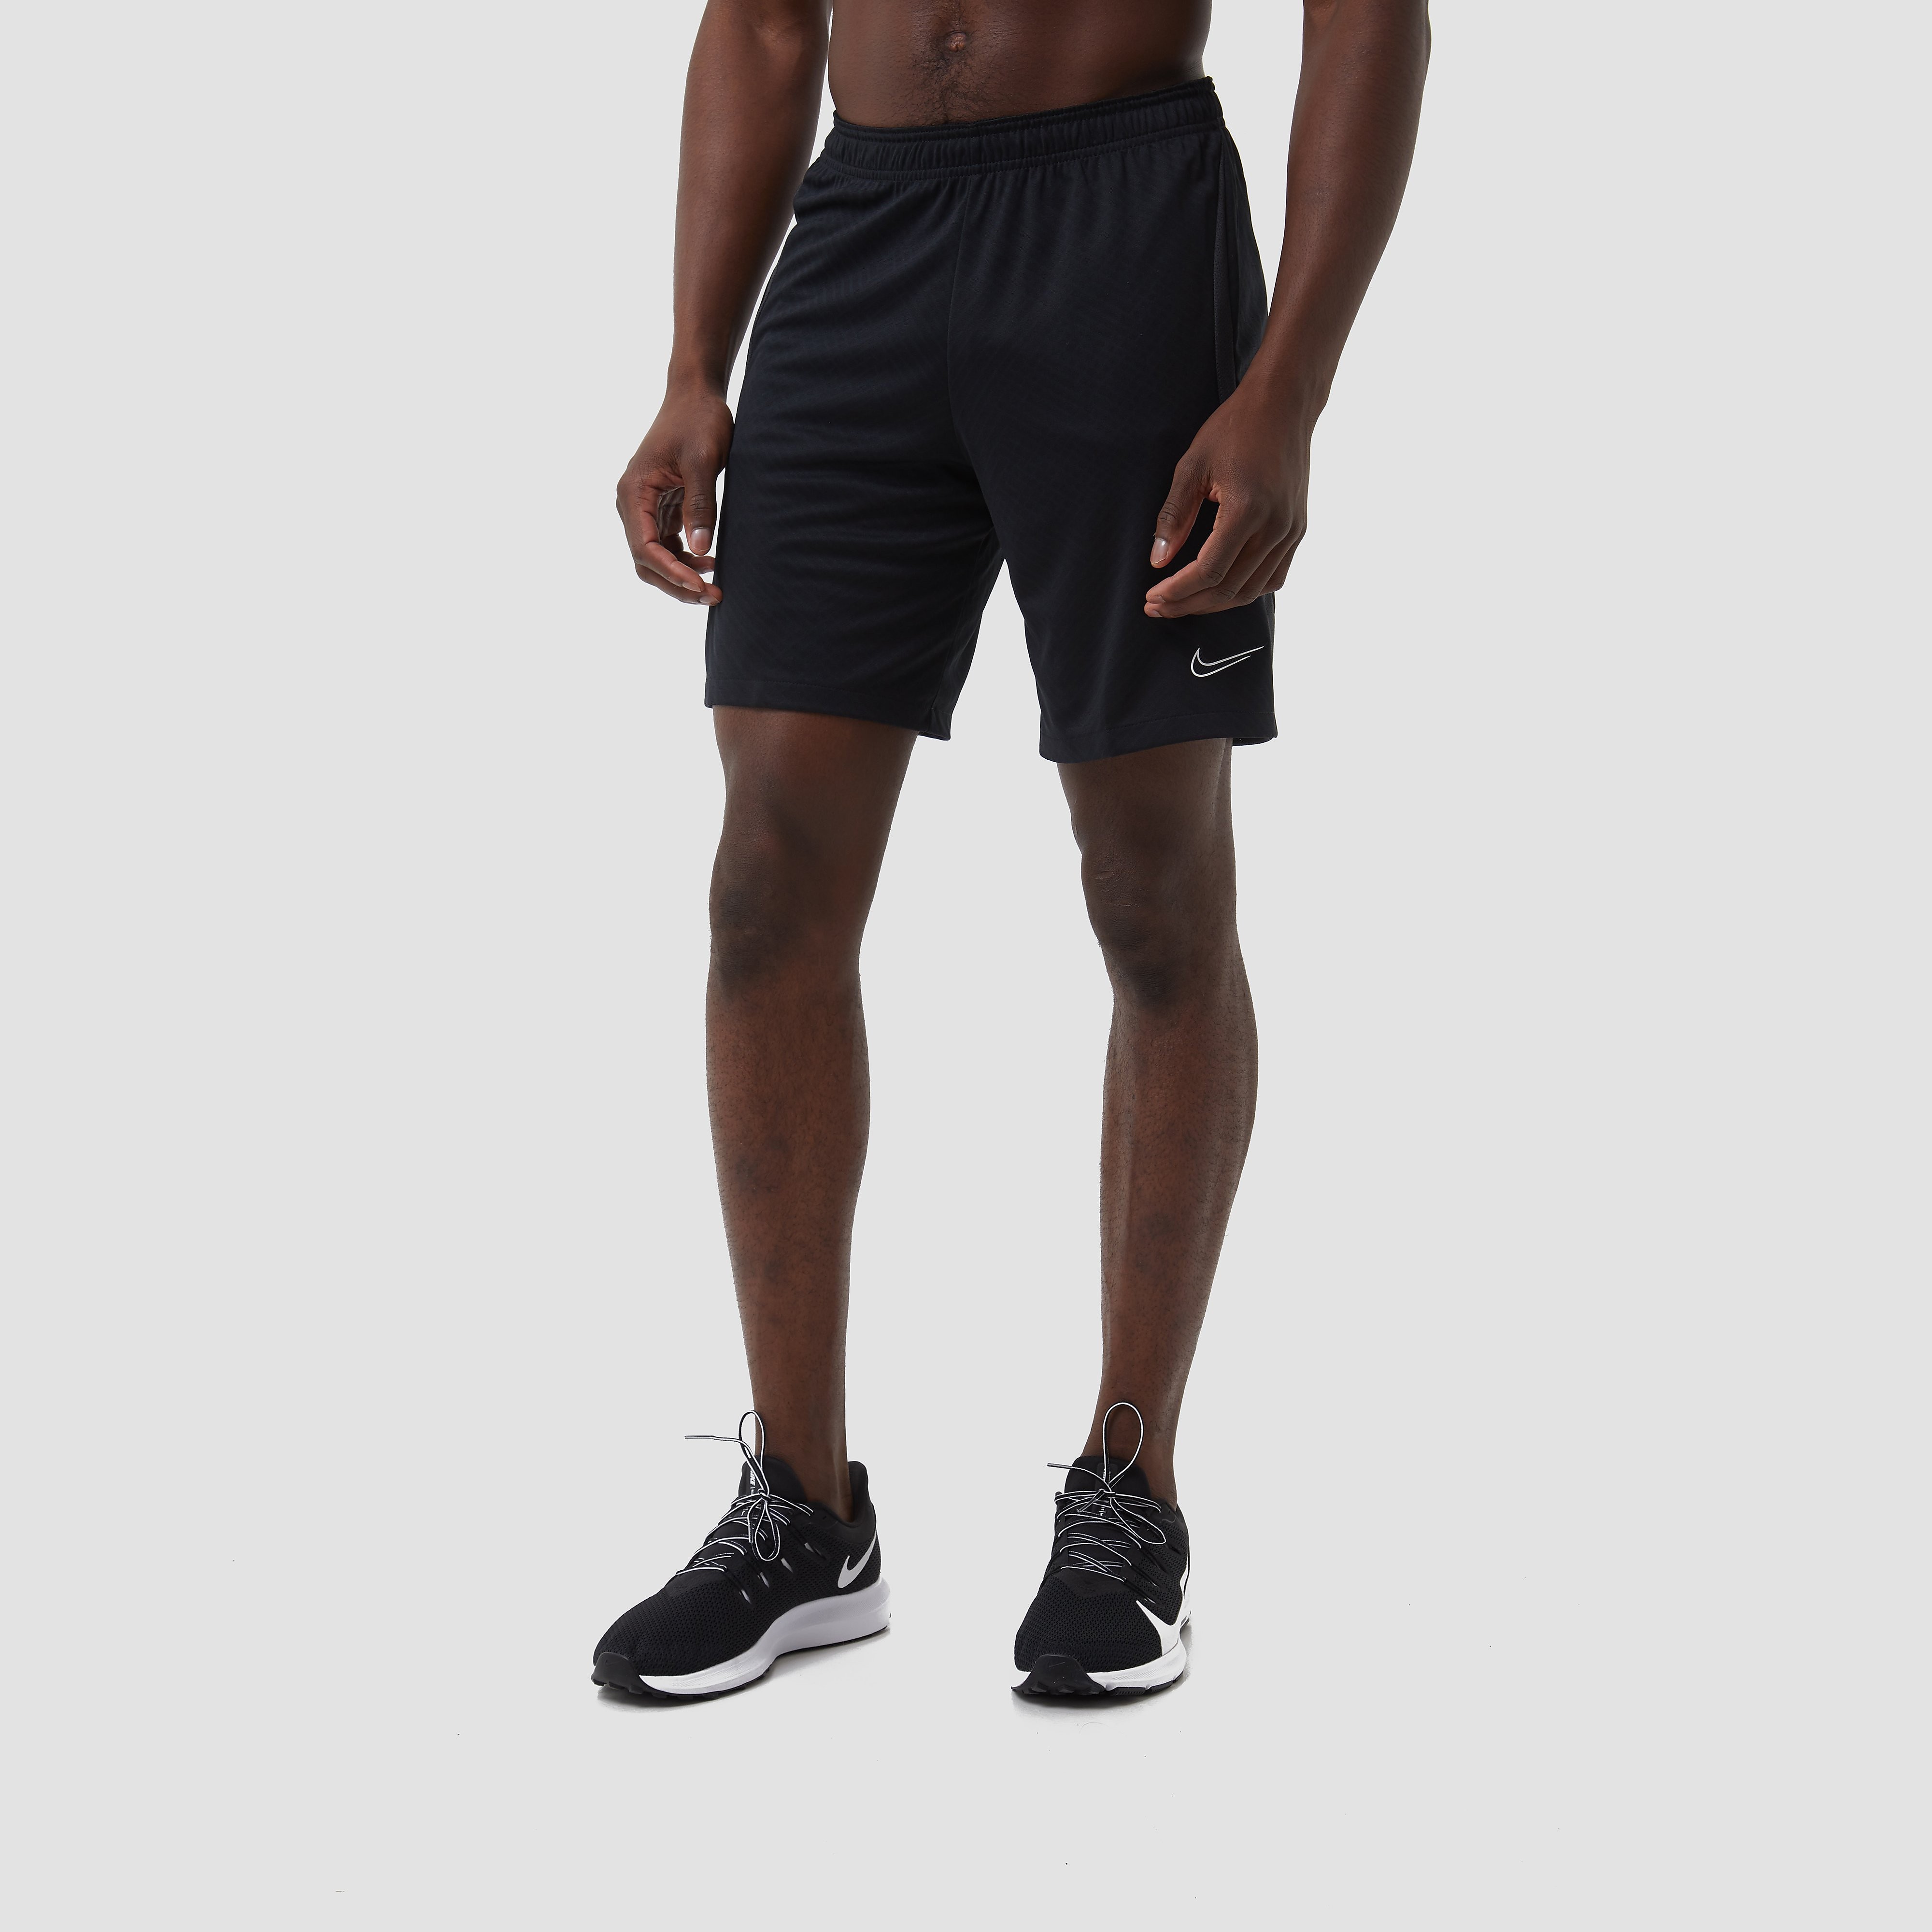 Nike Nike dri-fit strike voetbalbroekje zwart/wit heren heren